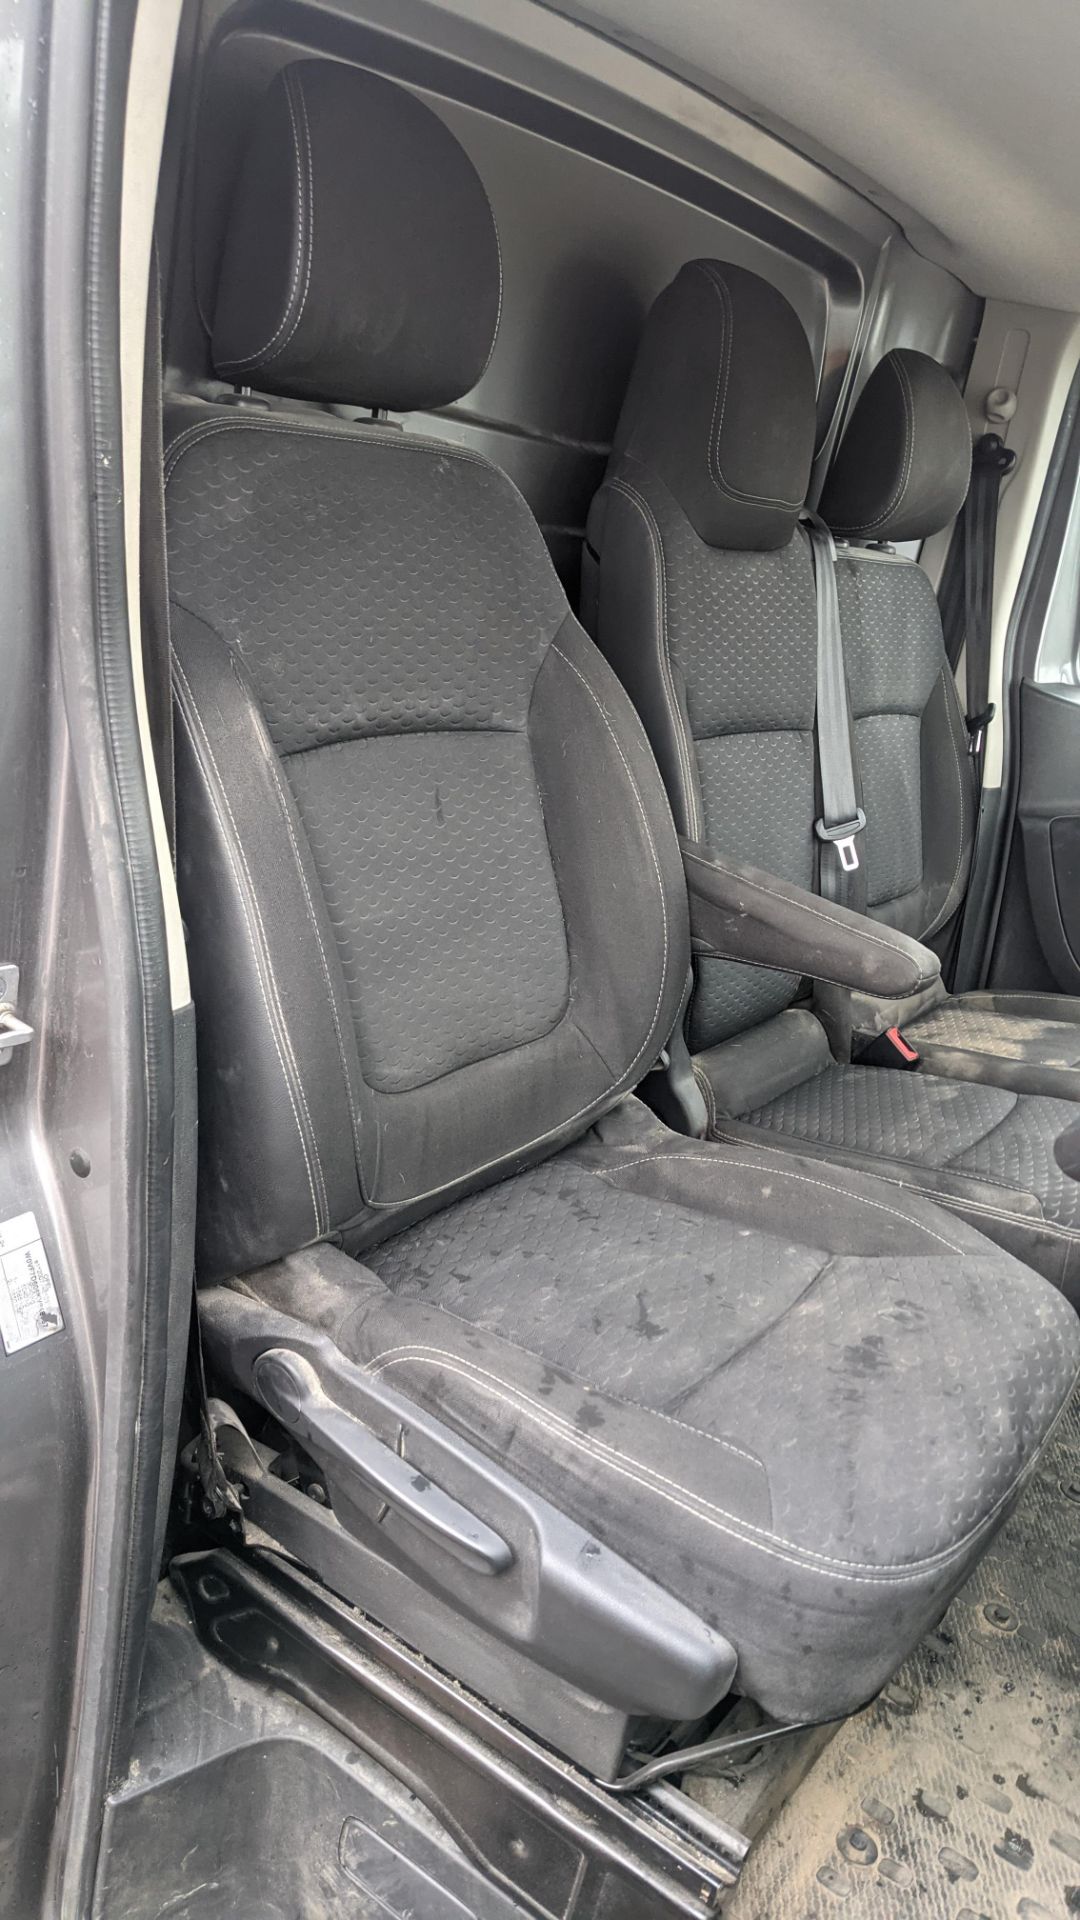 2019 Vauxhall Vivaro L2 2900 Sport CDTI BT SS panel van (Registration FD19 YUB) - Image 35 of 55